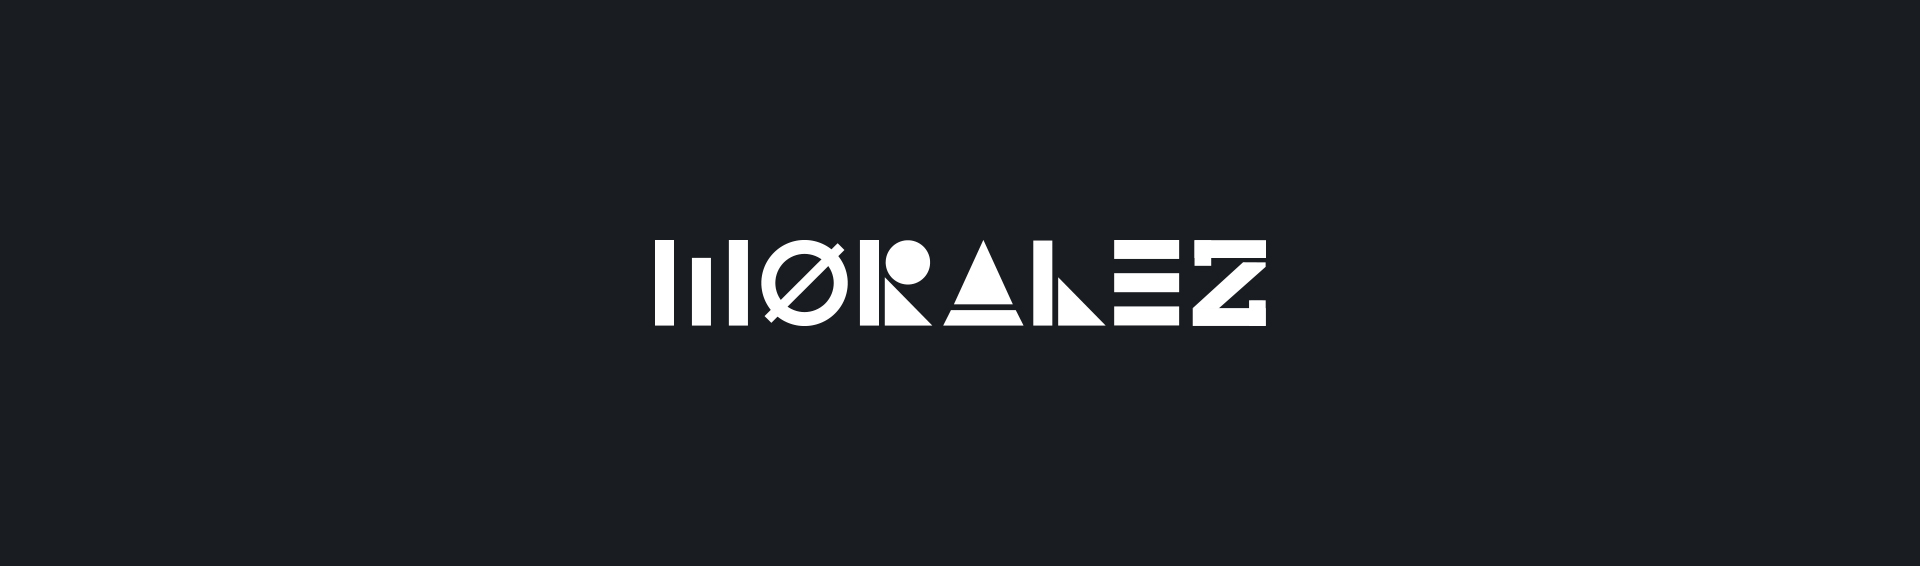 moralez_logotype_identity_corporate